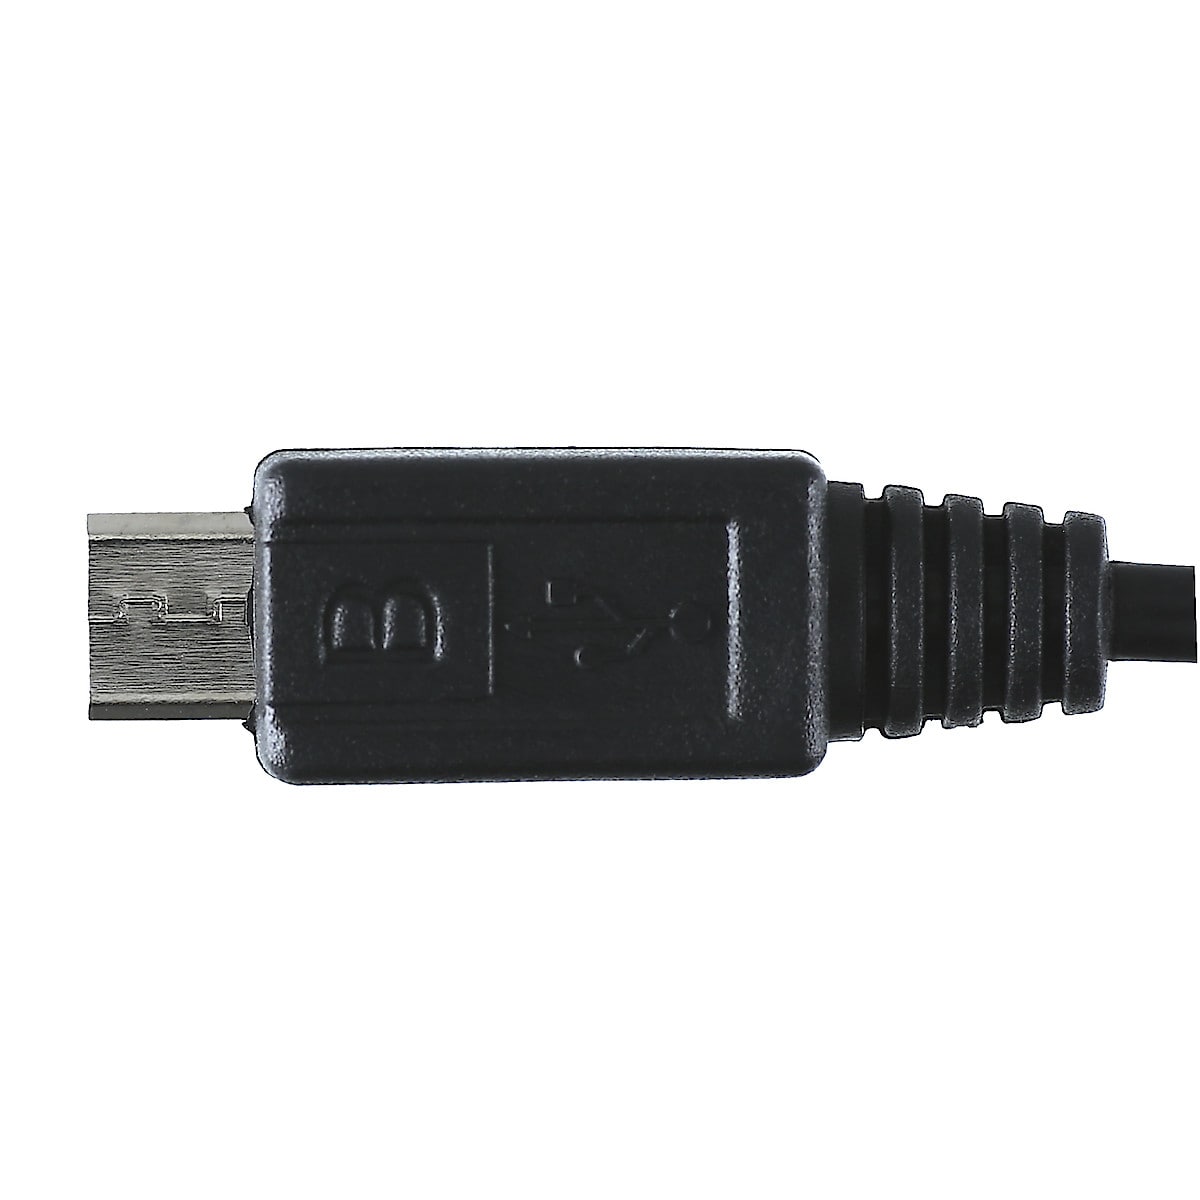 USB-lader Bosch IXO